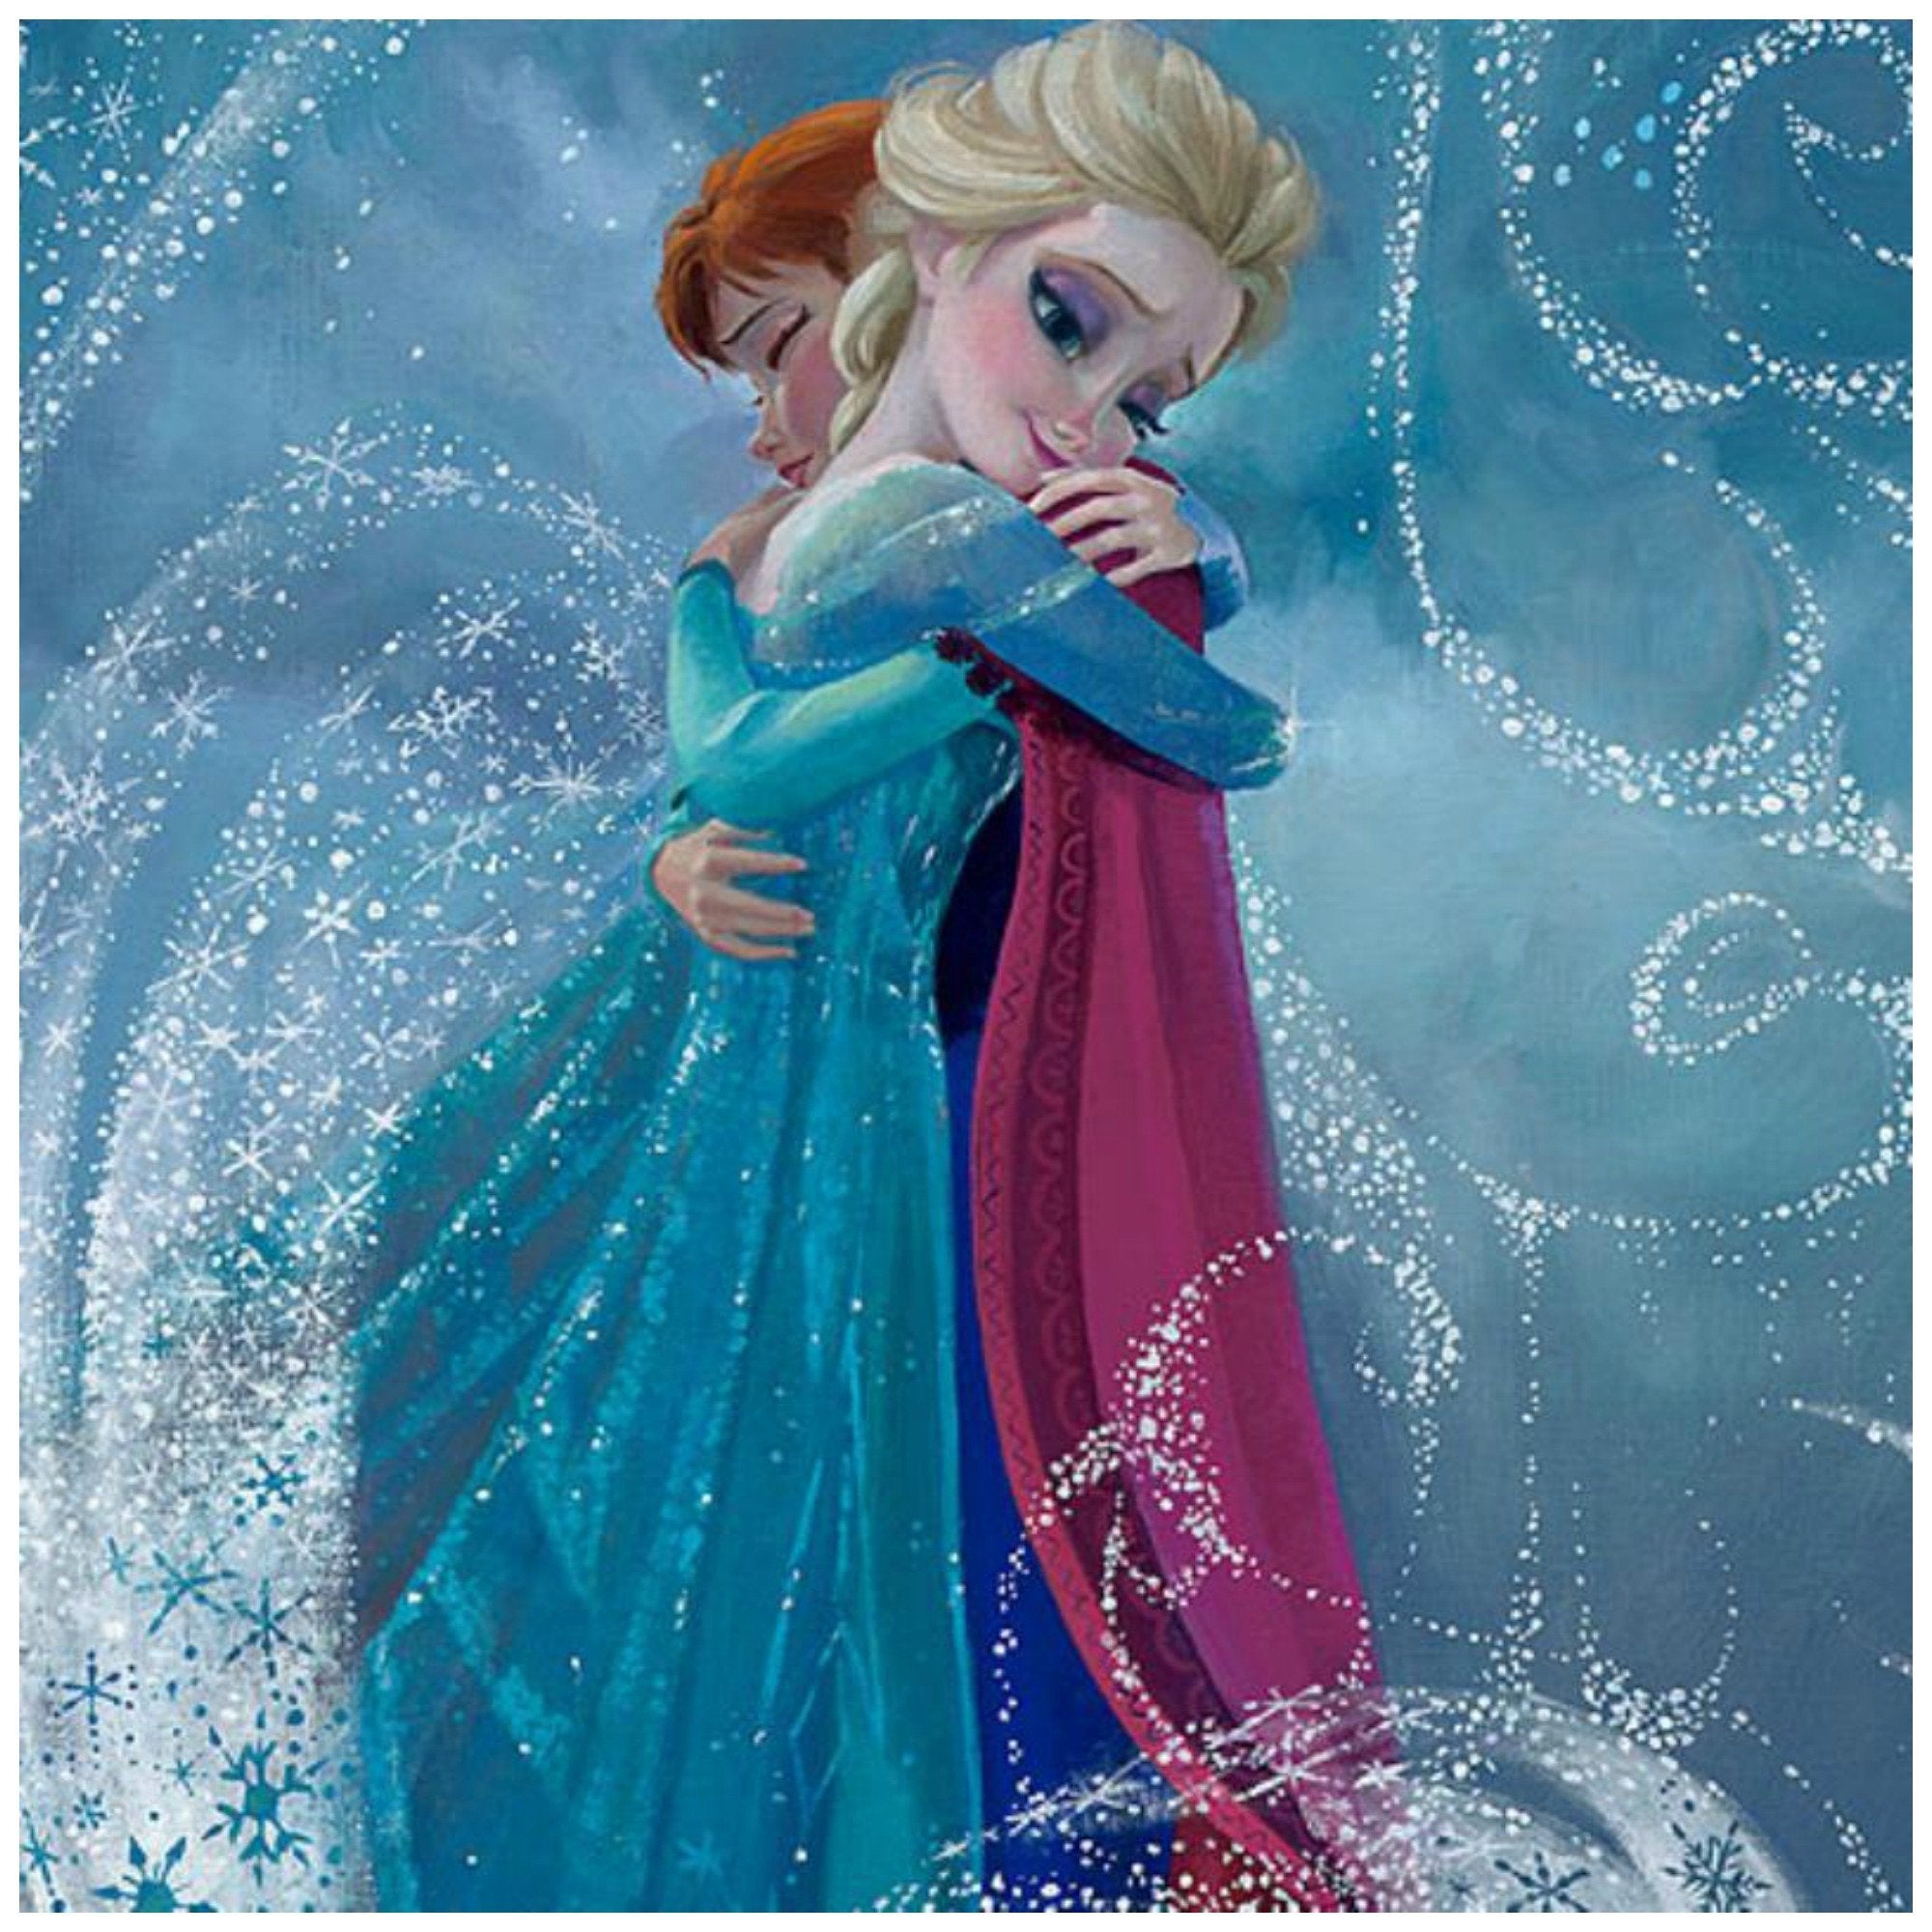 Elsa and Anna share a warm heart hug - closeup